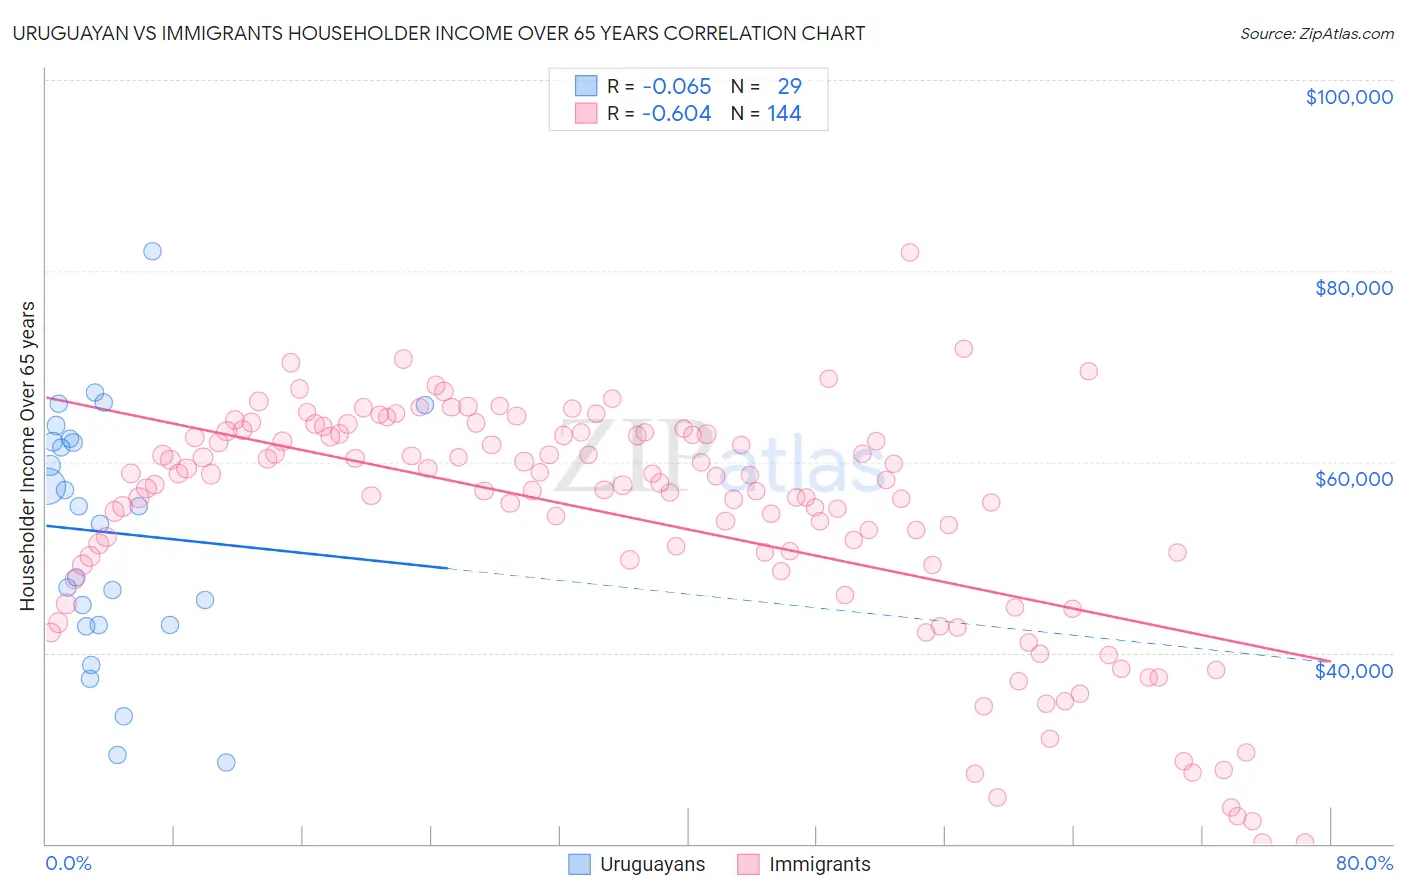 Uruguayan vs Immigrants Householder Income Over 65 years